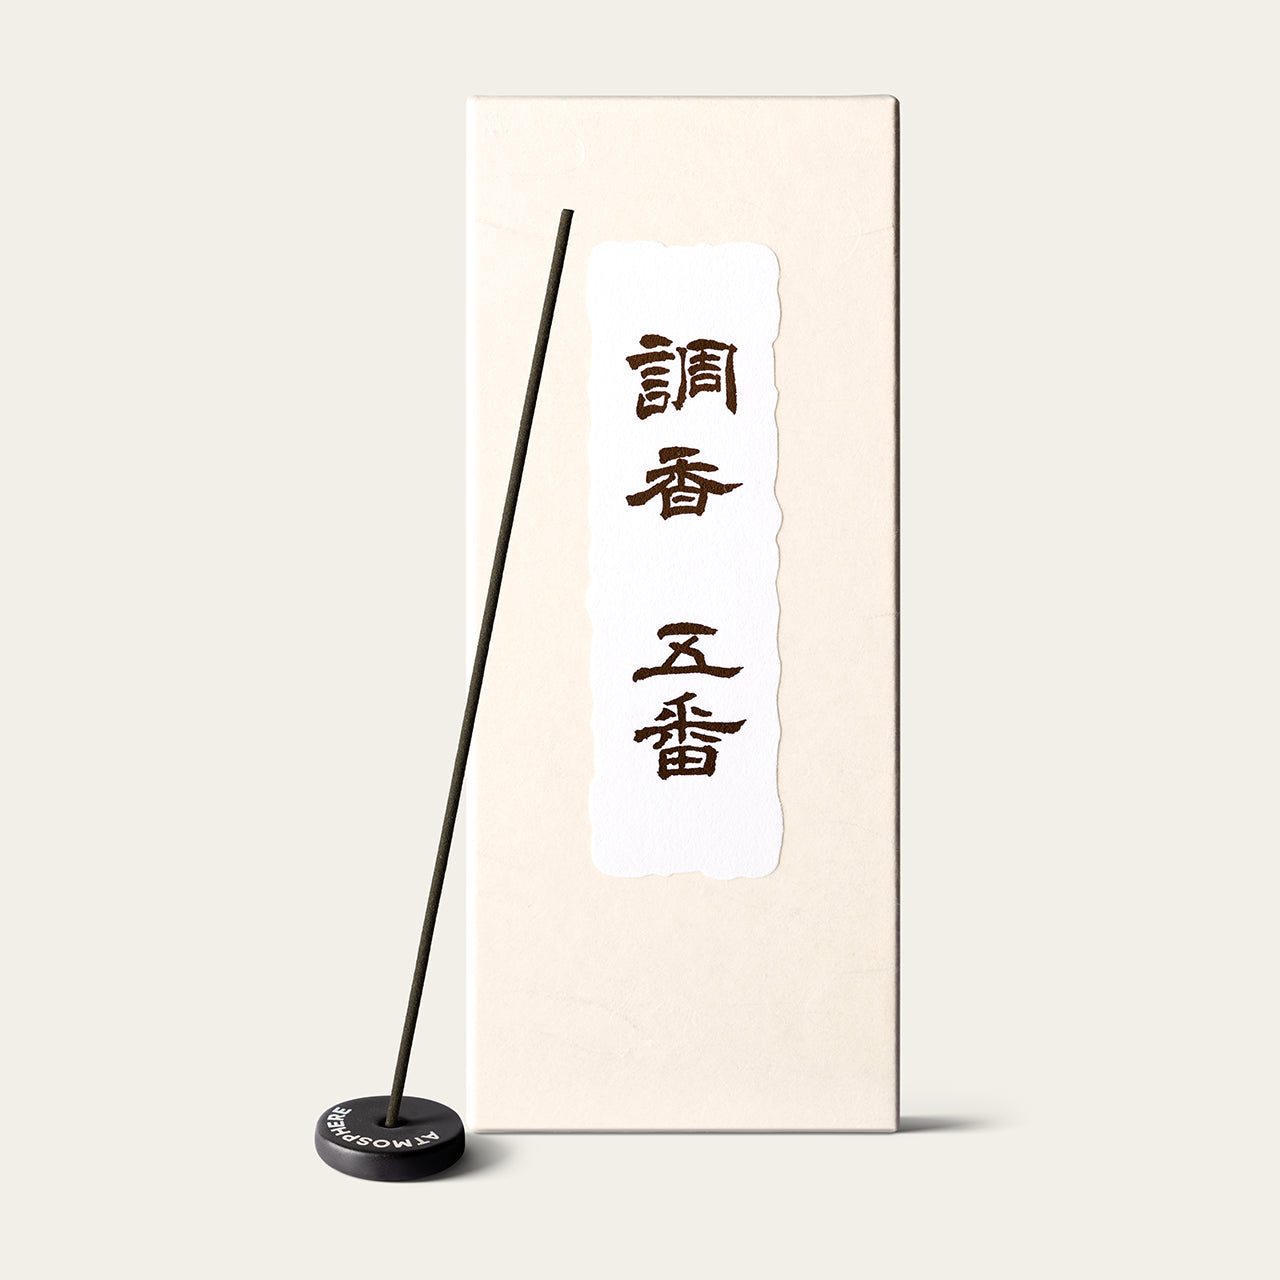 Minorien Fuin Five Acts Choukou Goban Japanese incense sticks (15 sticks) with Atmosphere ceramic incense holder